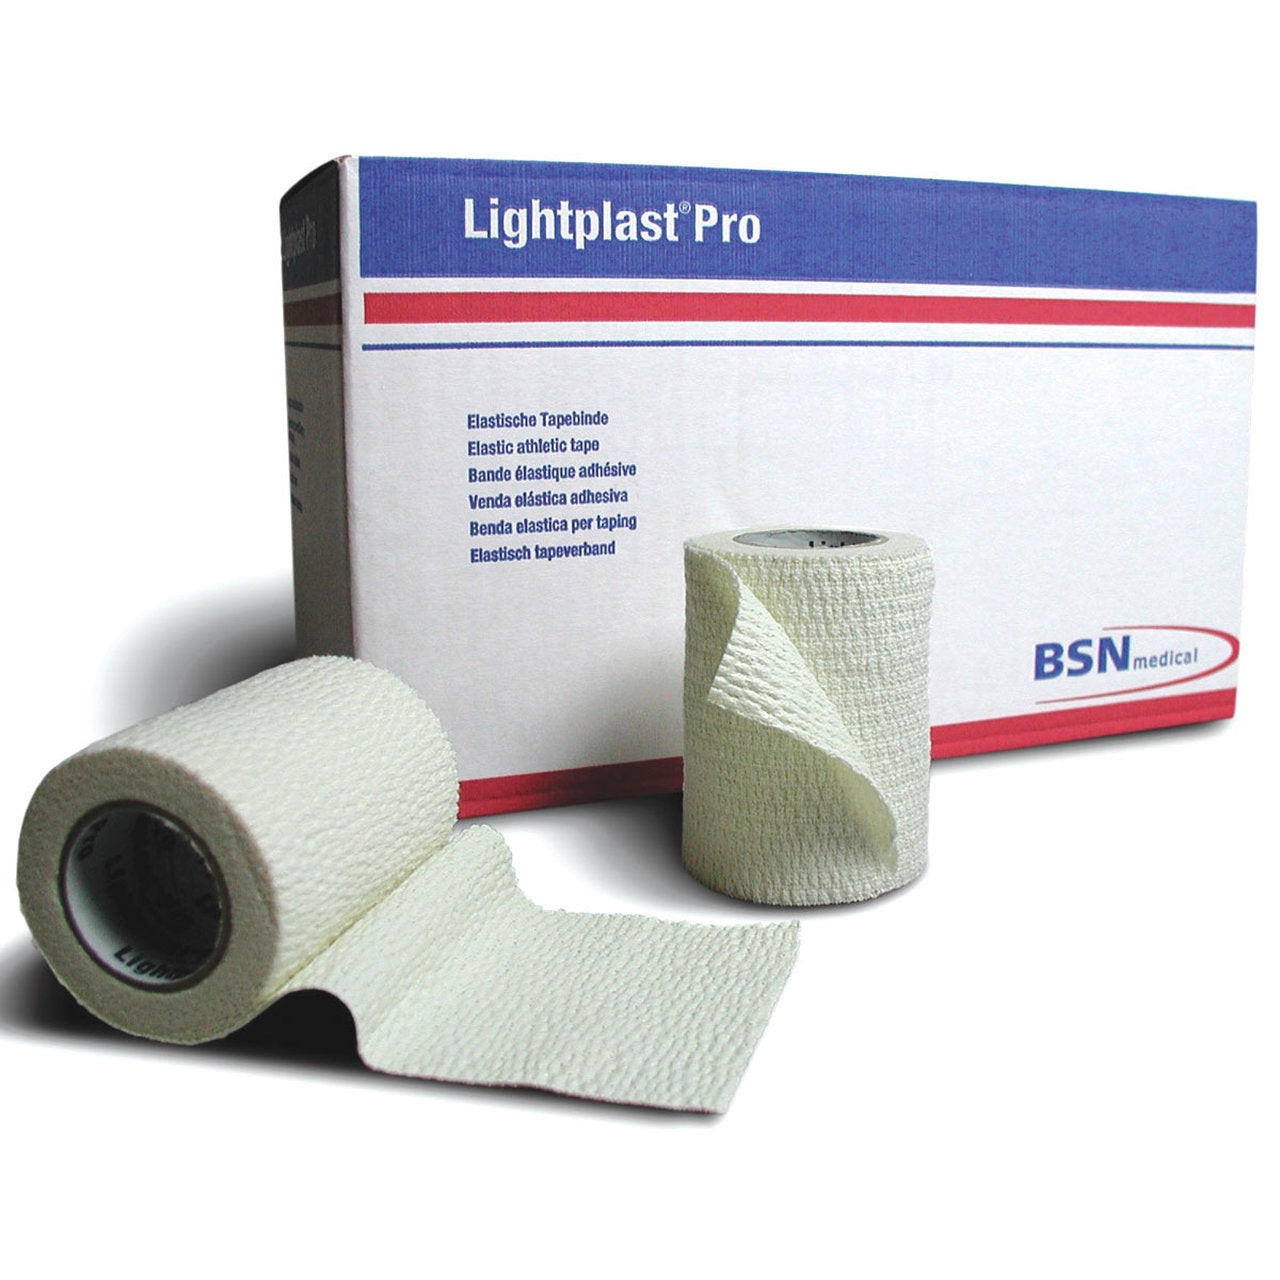 Lightplast Pro - 7.5cm x 6.8cm